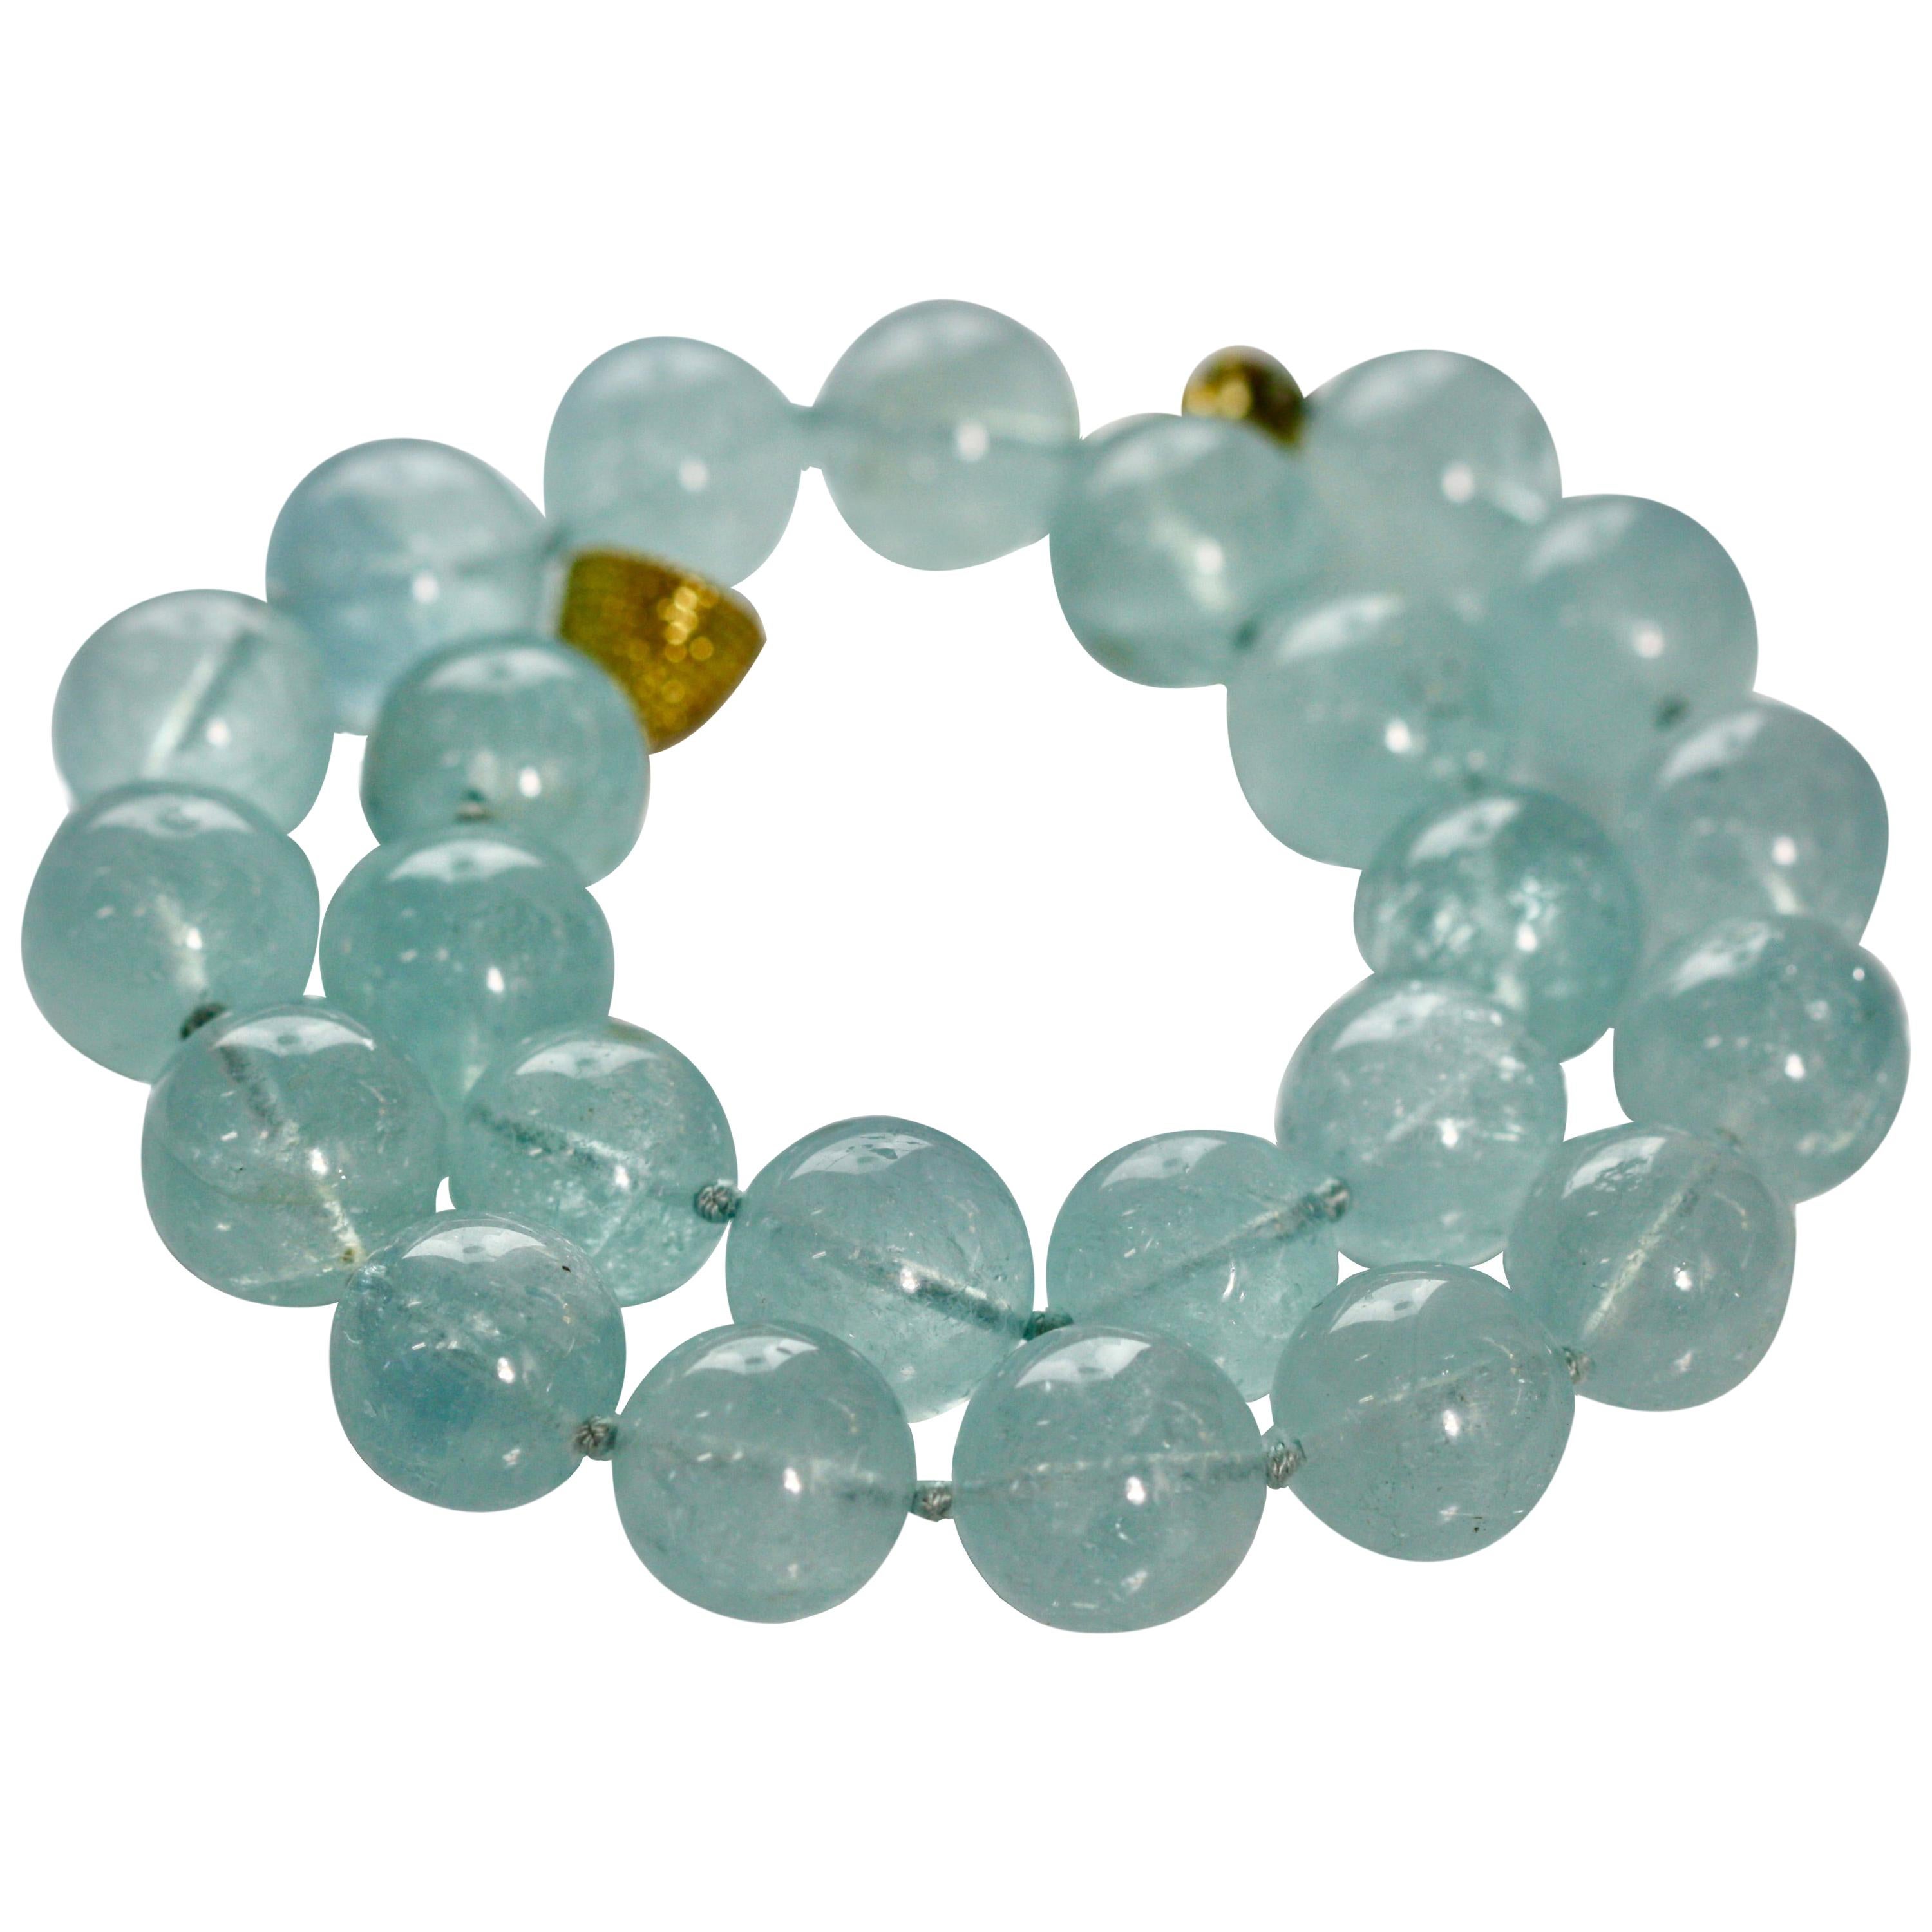 Aquamarine Necklace Designed as a Row of Aquamarine Spheres